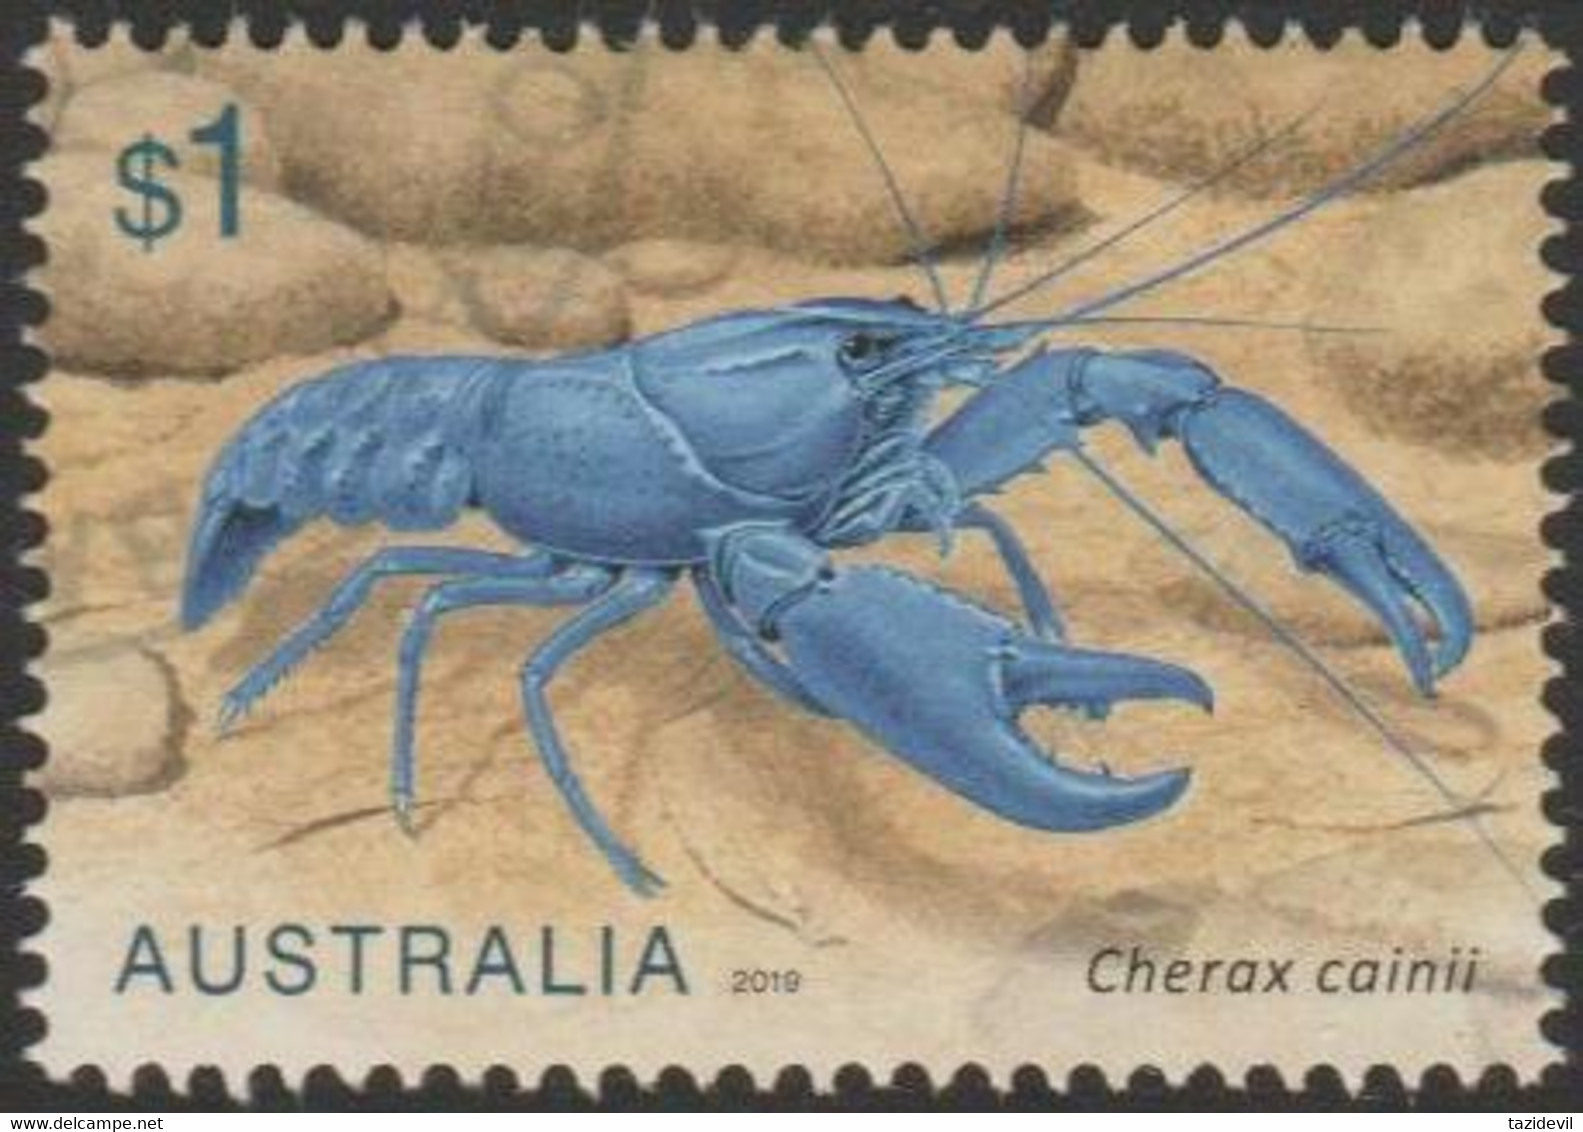 AUSTRALIA - USED 2019 $1.00 Feshwater Crayfish - Giant Tasmanian Crayfish - Usados